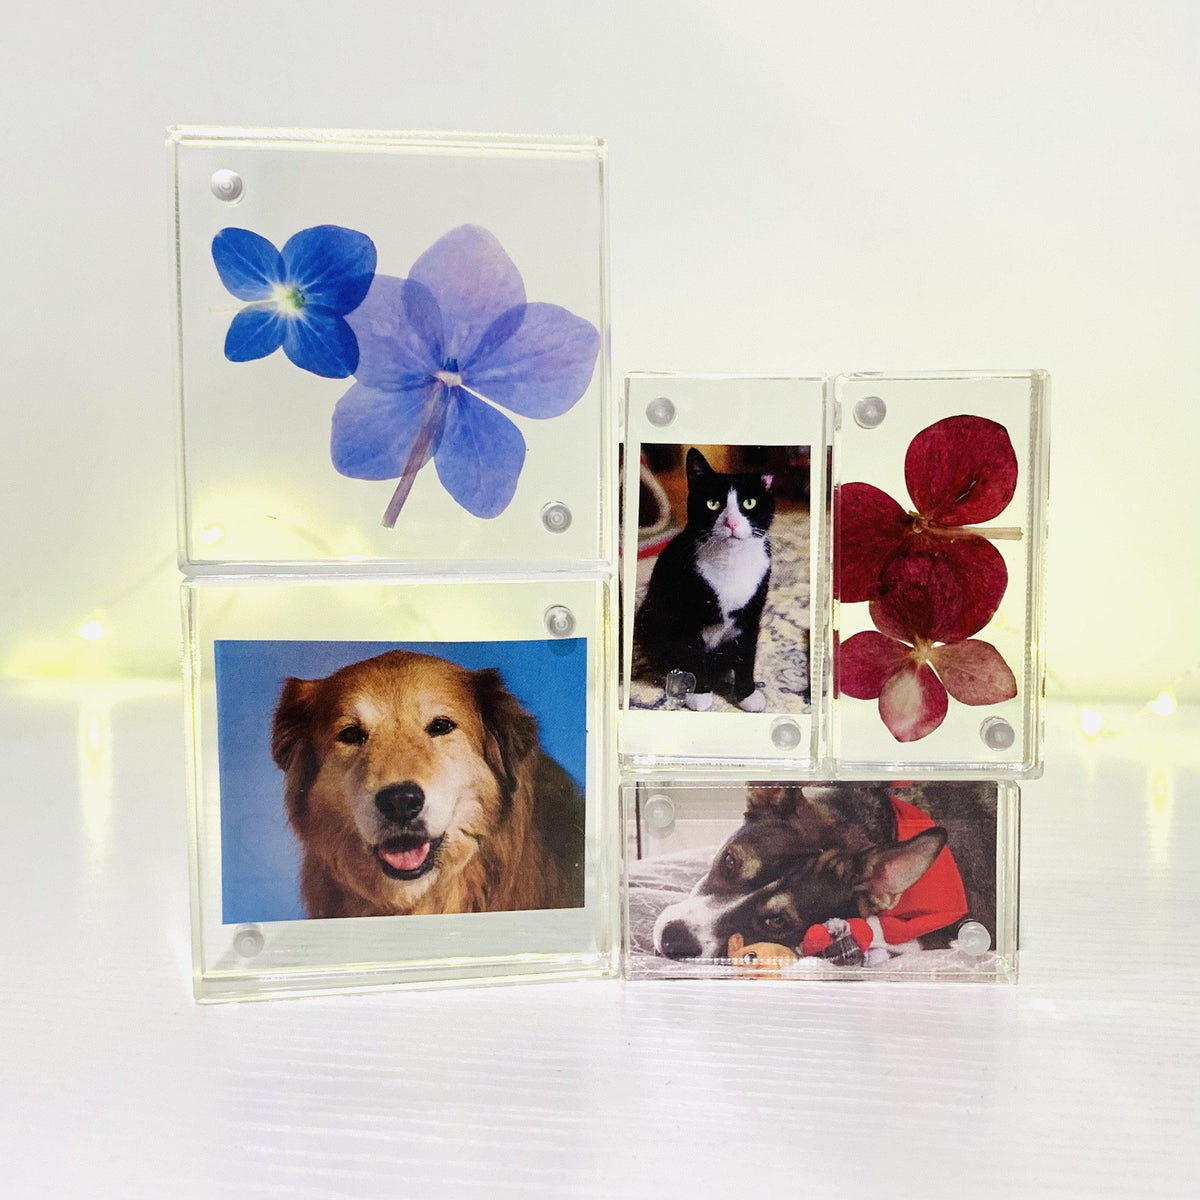 Recycled Glass Magnets - Luke Adams Glass Blowing Studio